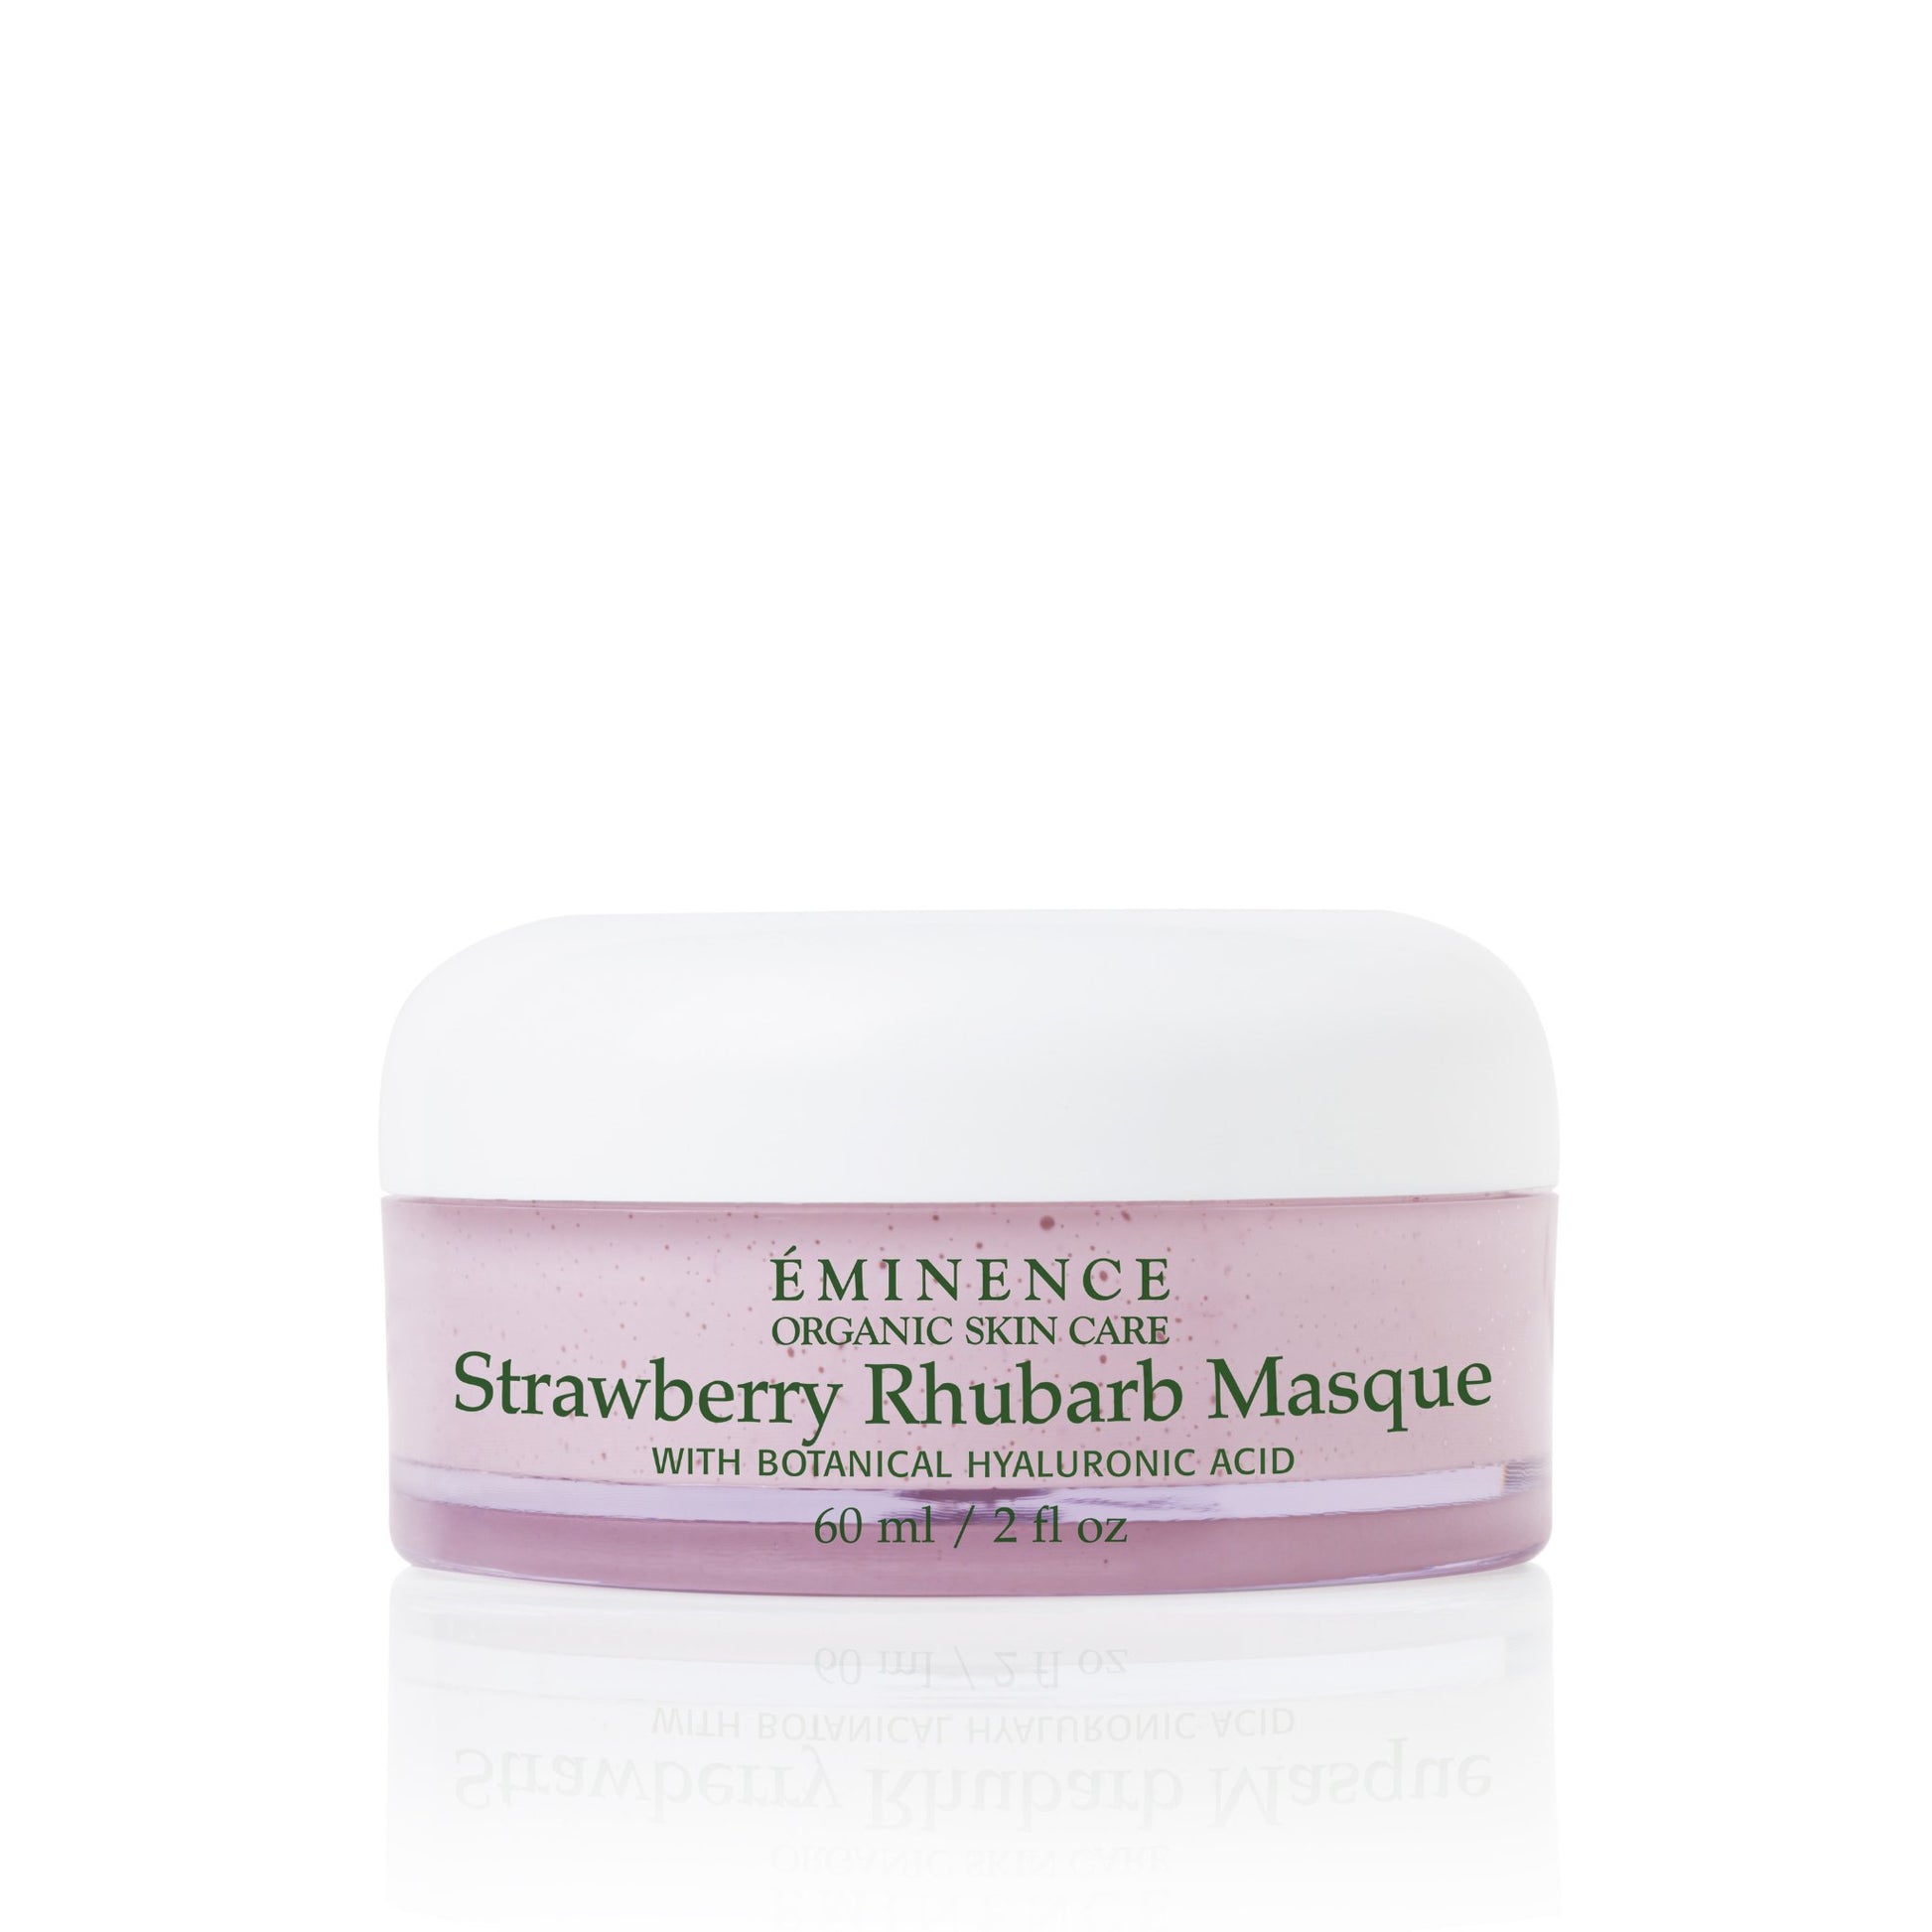 Eminence Organics - Eminence Strawberry Rhubarb Masque - ORESTA clean beauty simplified